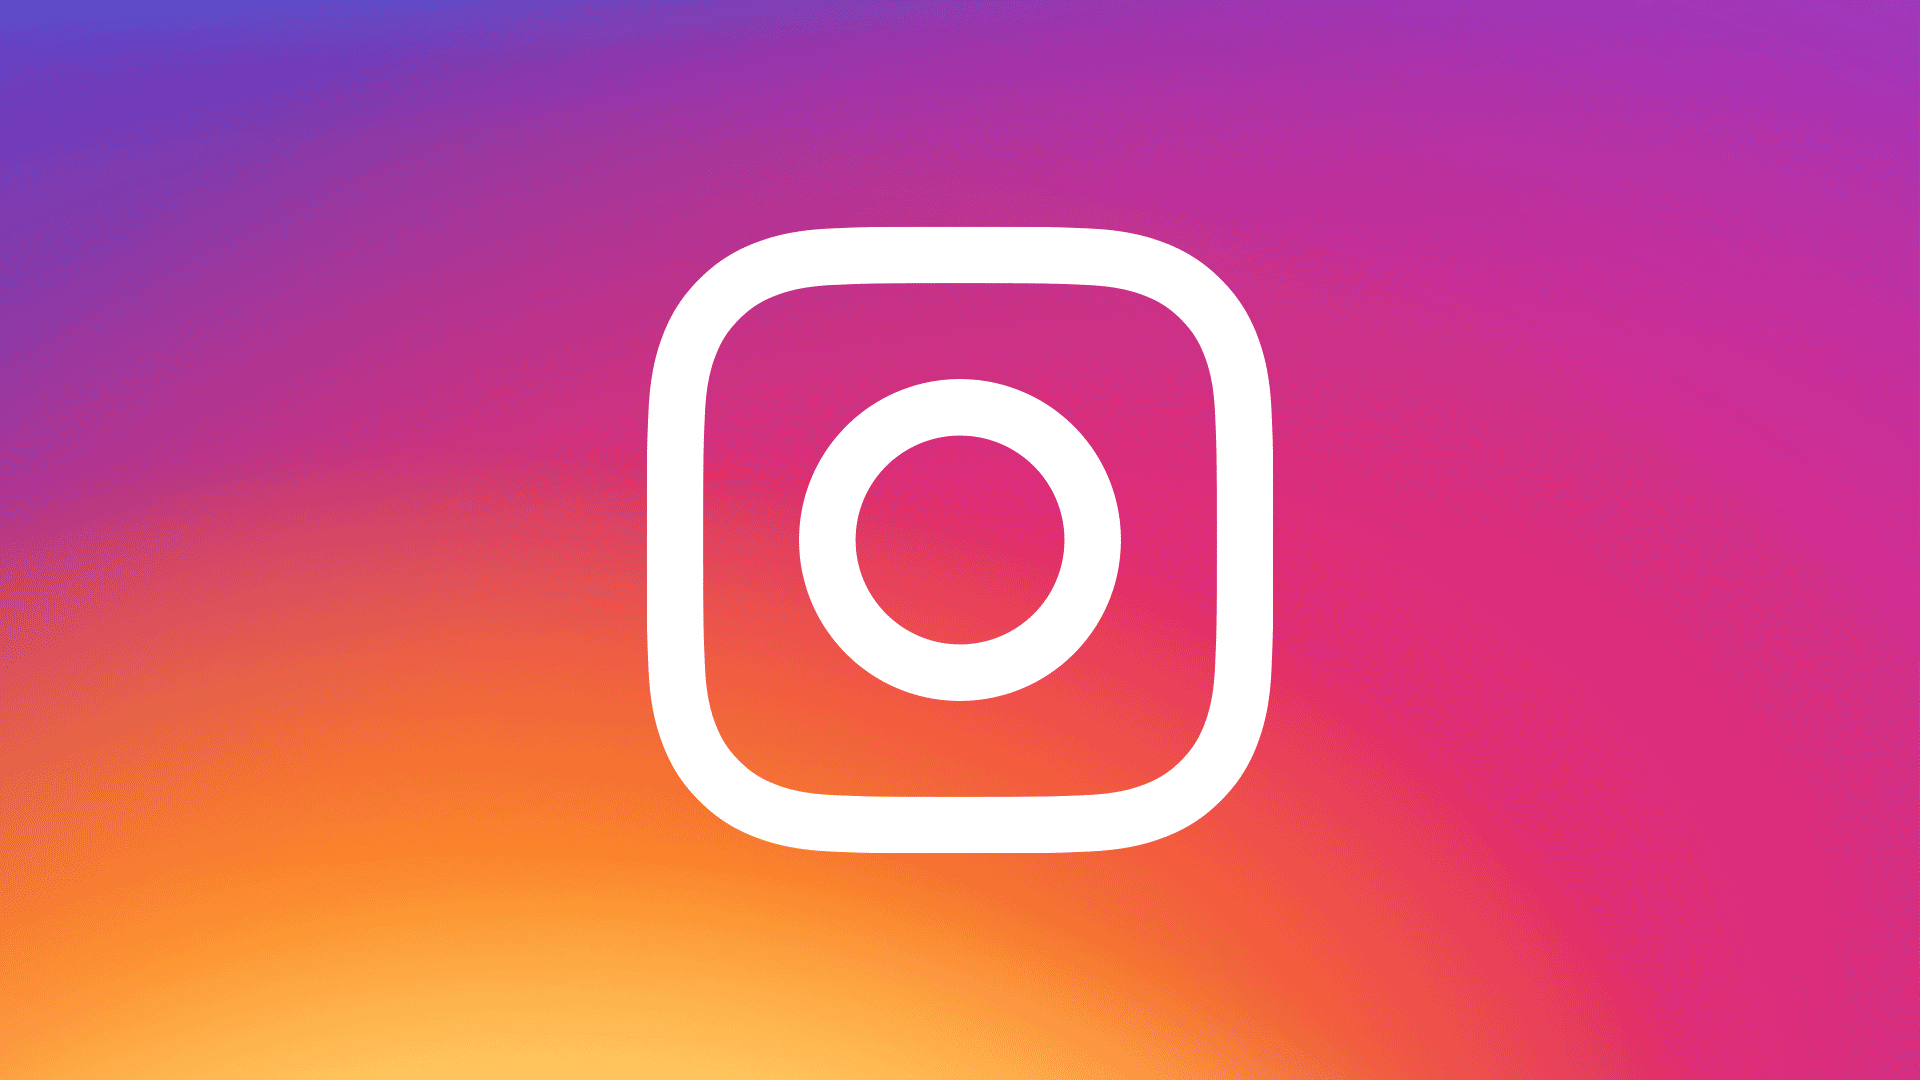 GIF of the instagram logo.